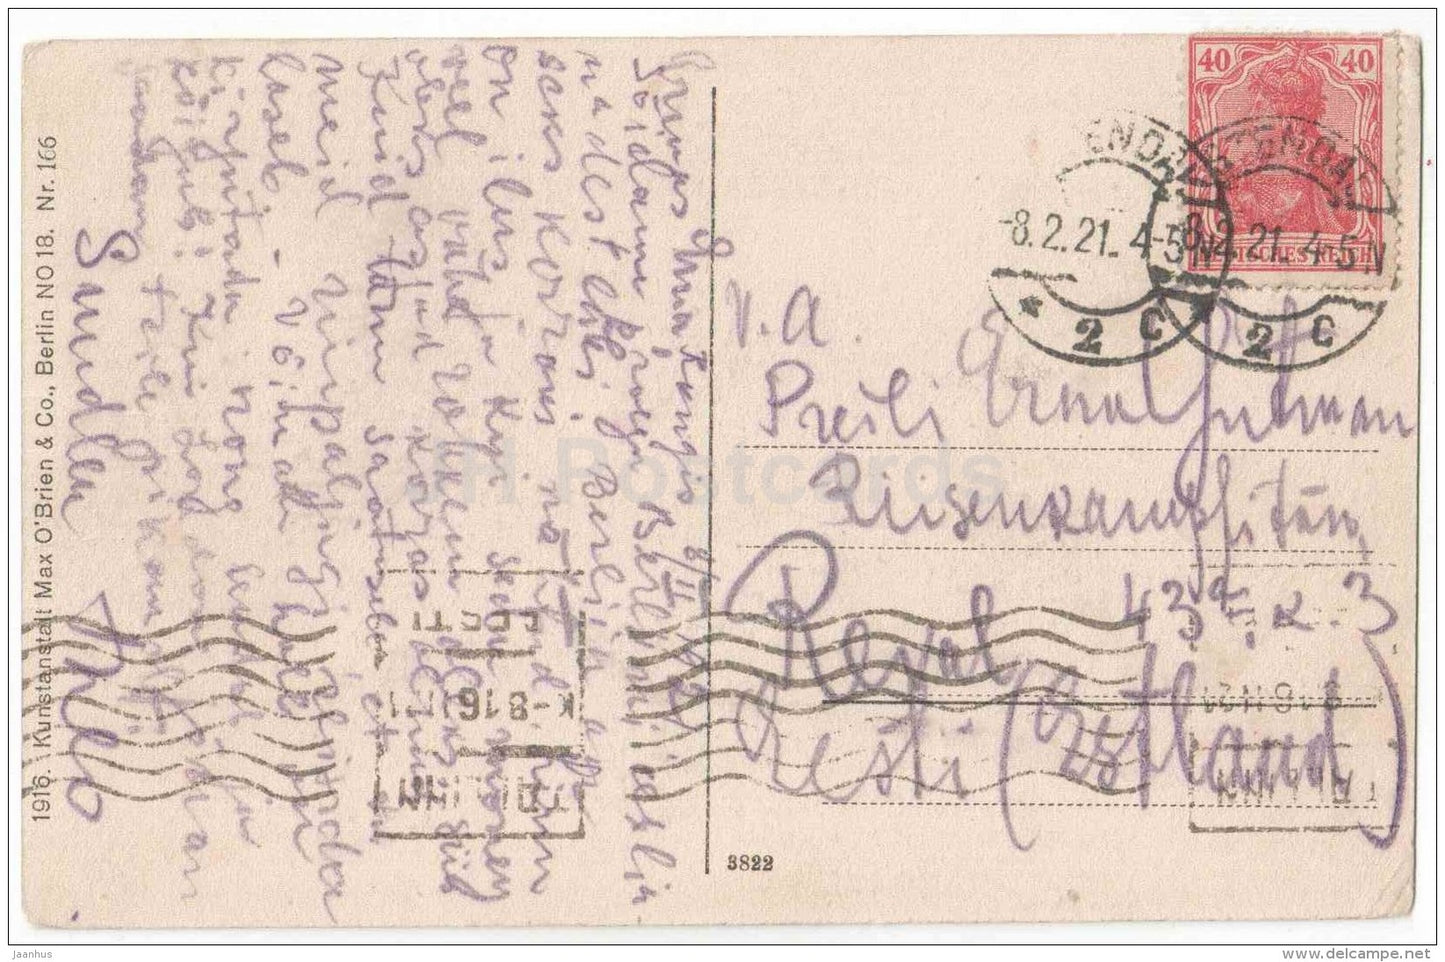 Fürstenhof - Potsdamer Platz - Bahnhof - Berlin - 3822 - Germany - sent from Germany Berlin to Estonia Tallinn 1921 - JH Postcards